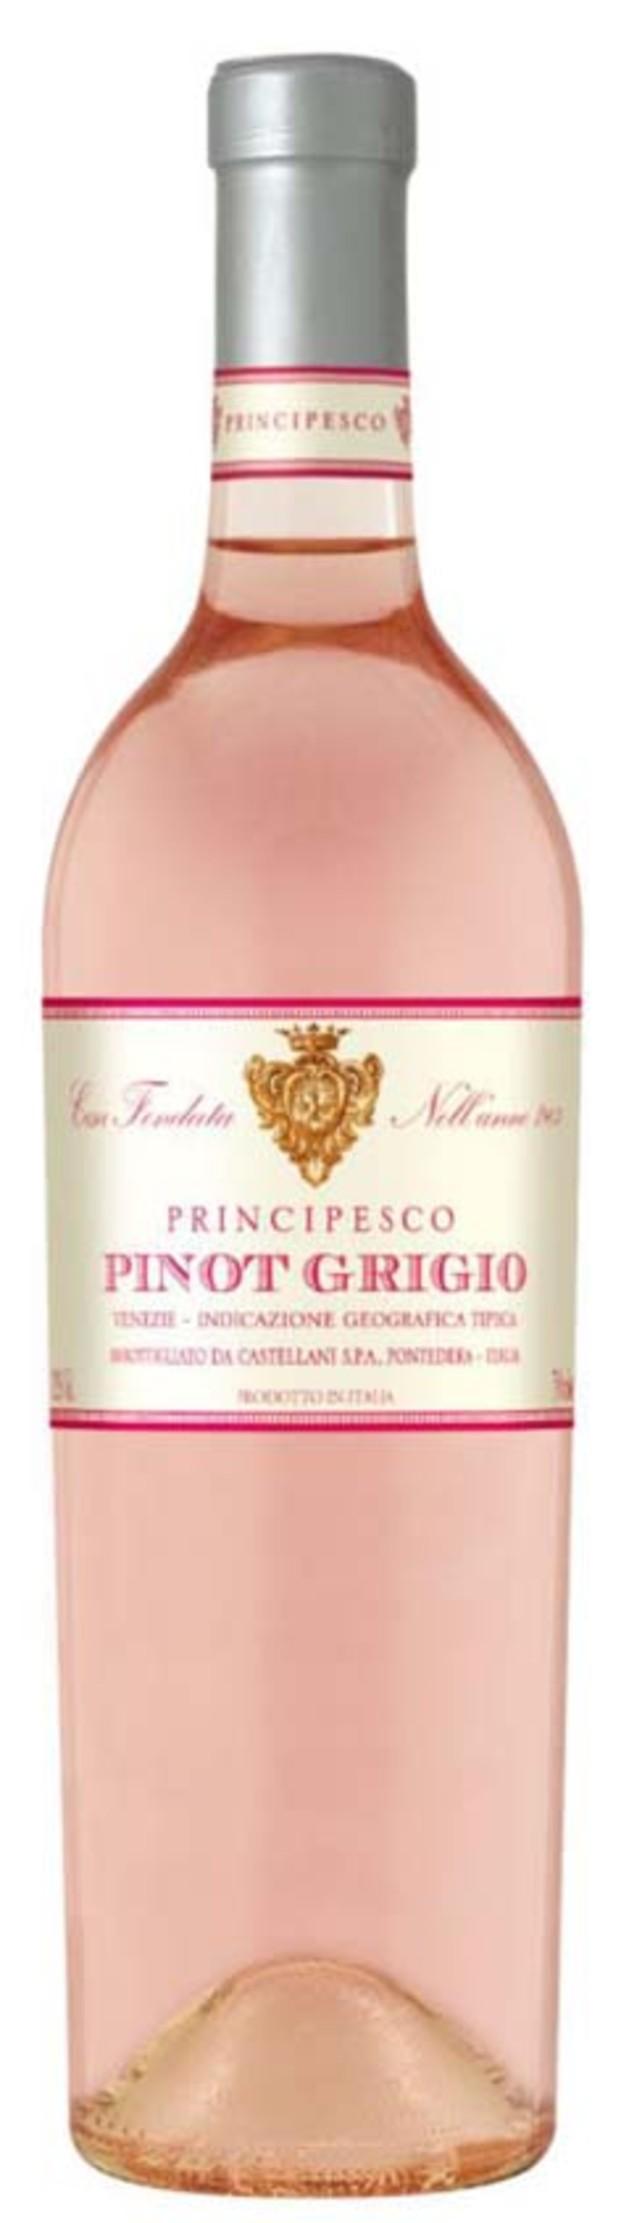 Pinot Ramato Principesco. Zona:Veneto, PINOT GRIGIO VENIZE IGT, PRINCIPESCO